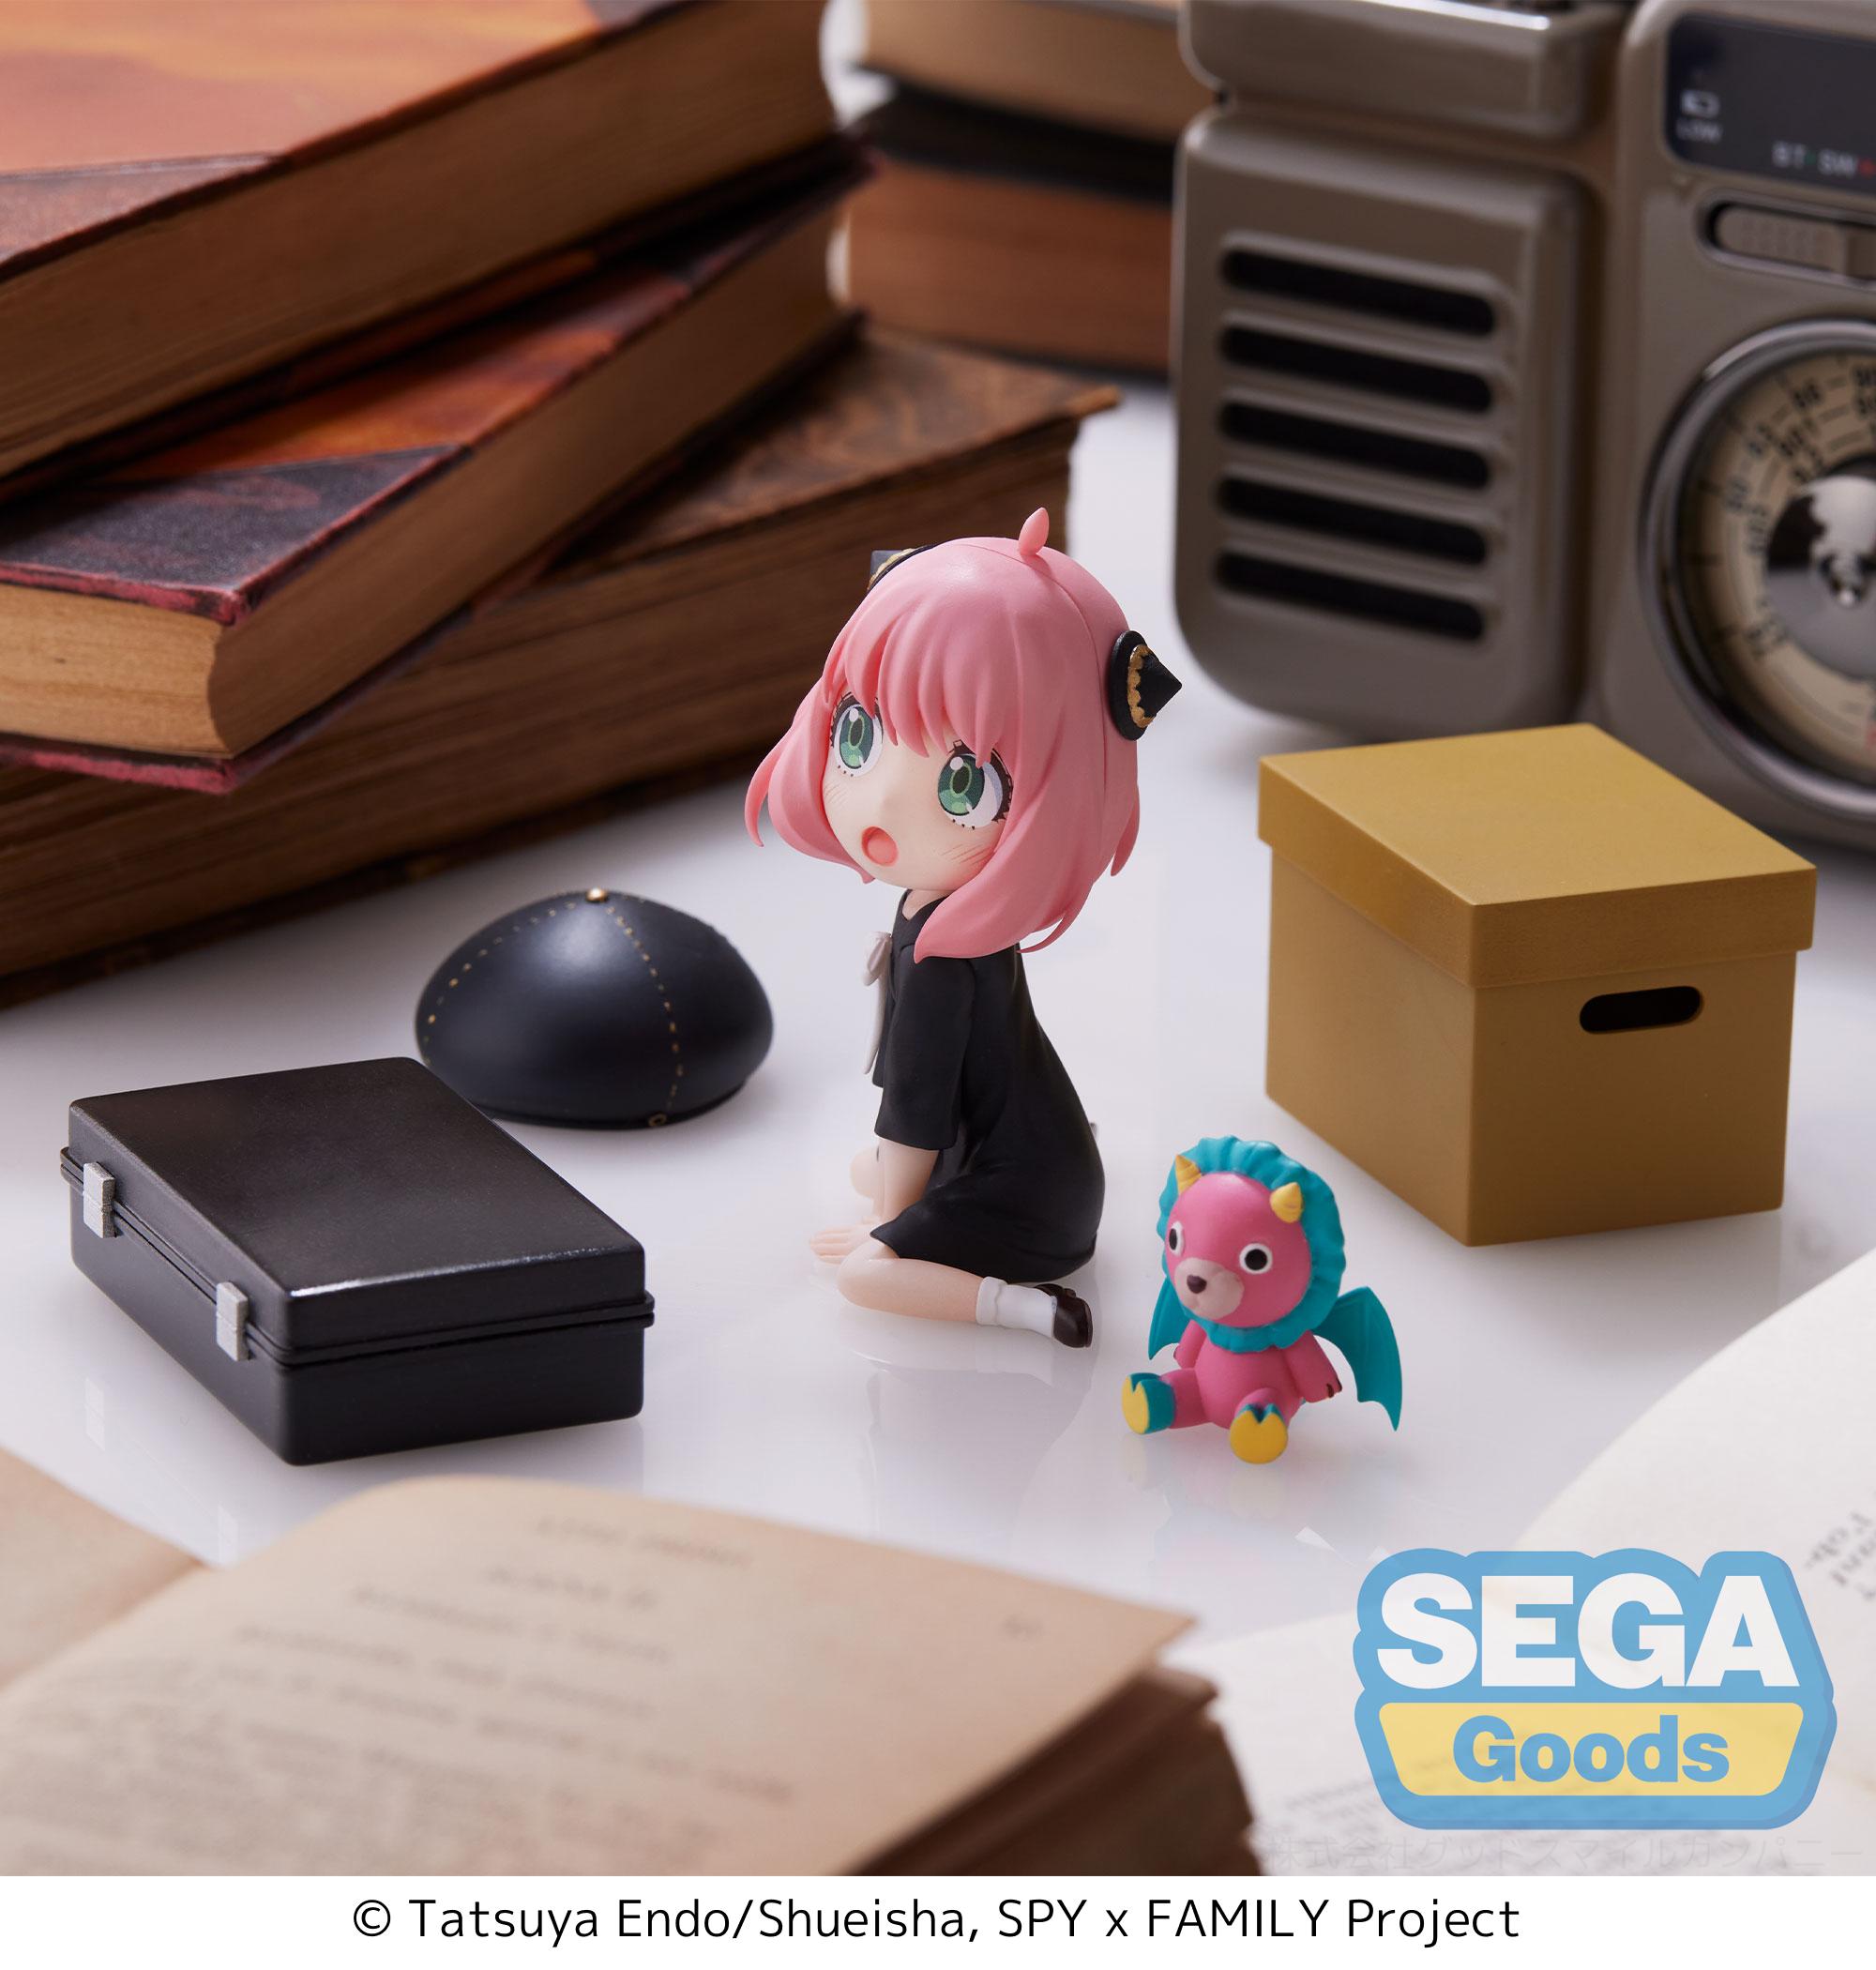 Sega Figures Luminasta: Spy x Family - Anya Forger Pretend Play